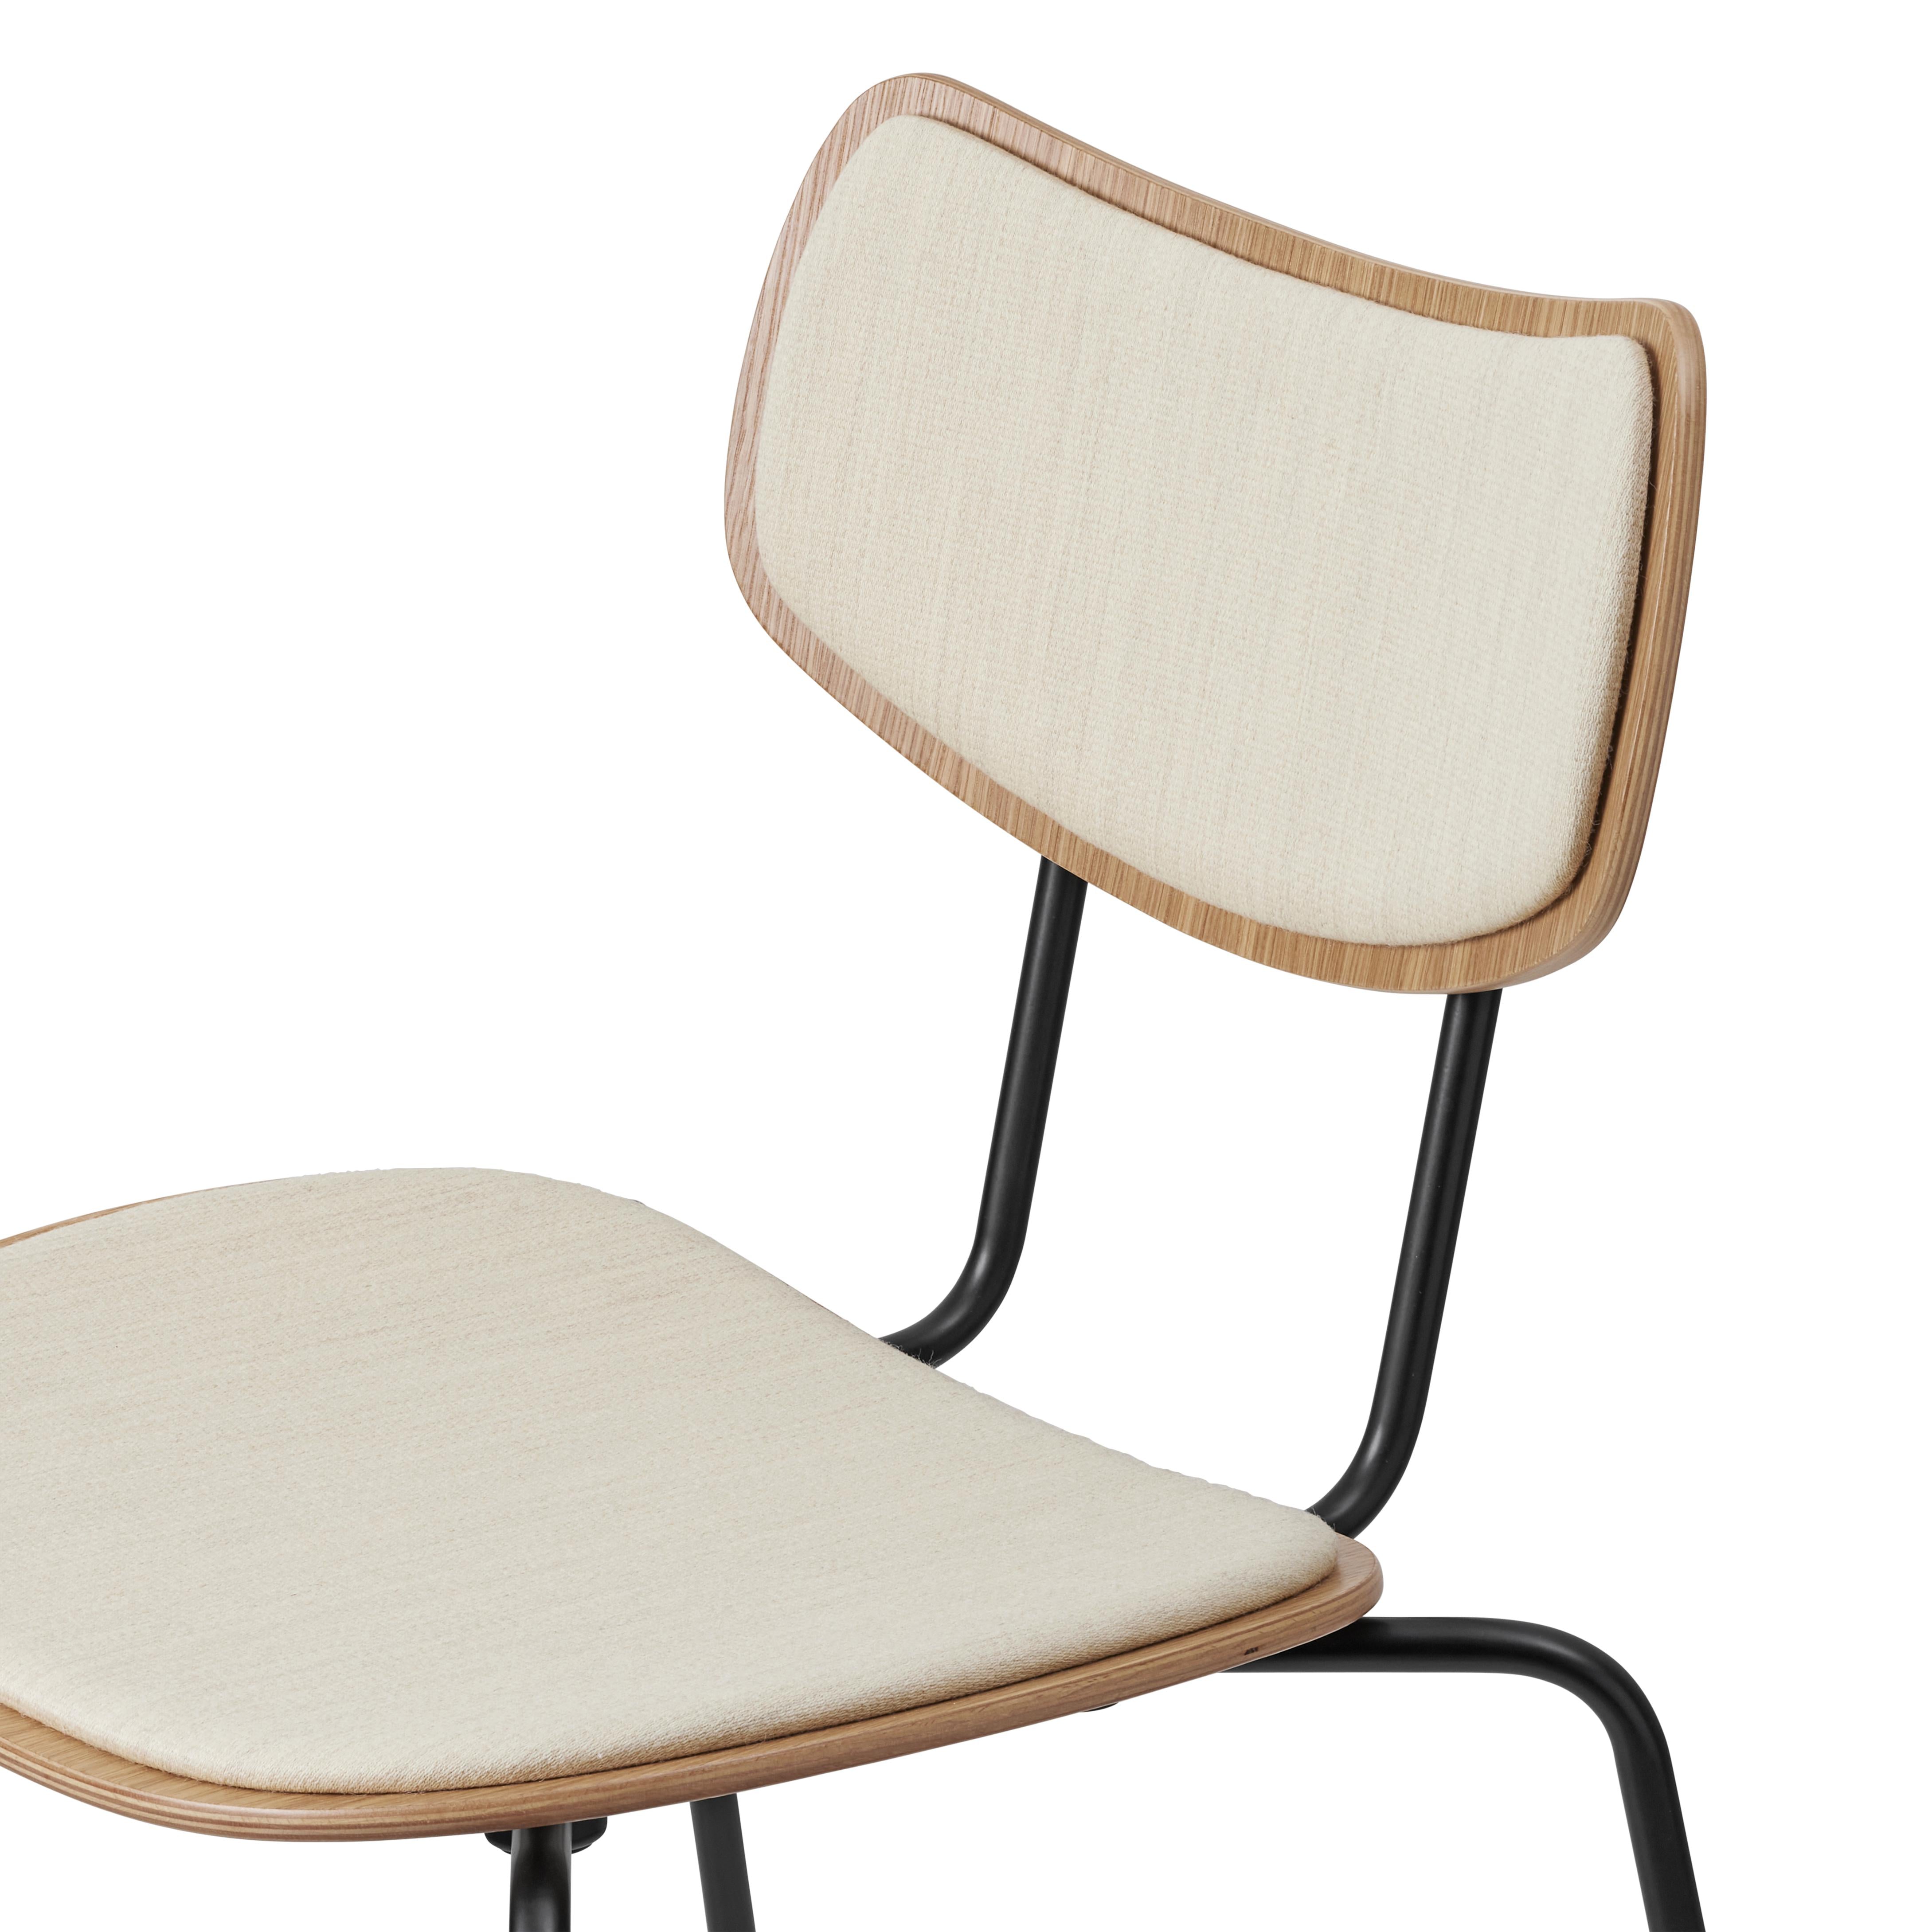 Carl Hansen Vla26p Vega Chair, Oak Lacquered/Mood 01104